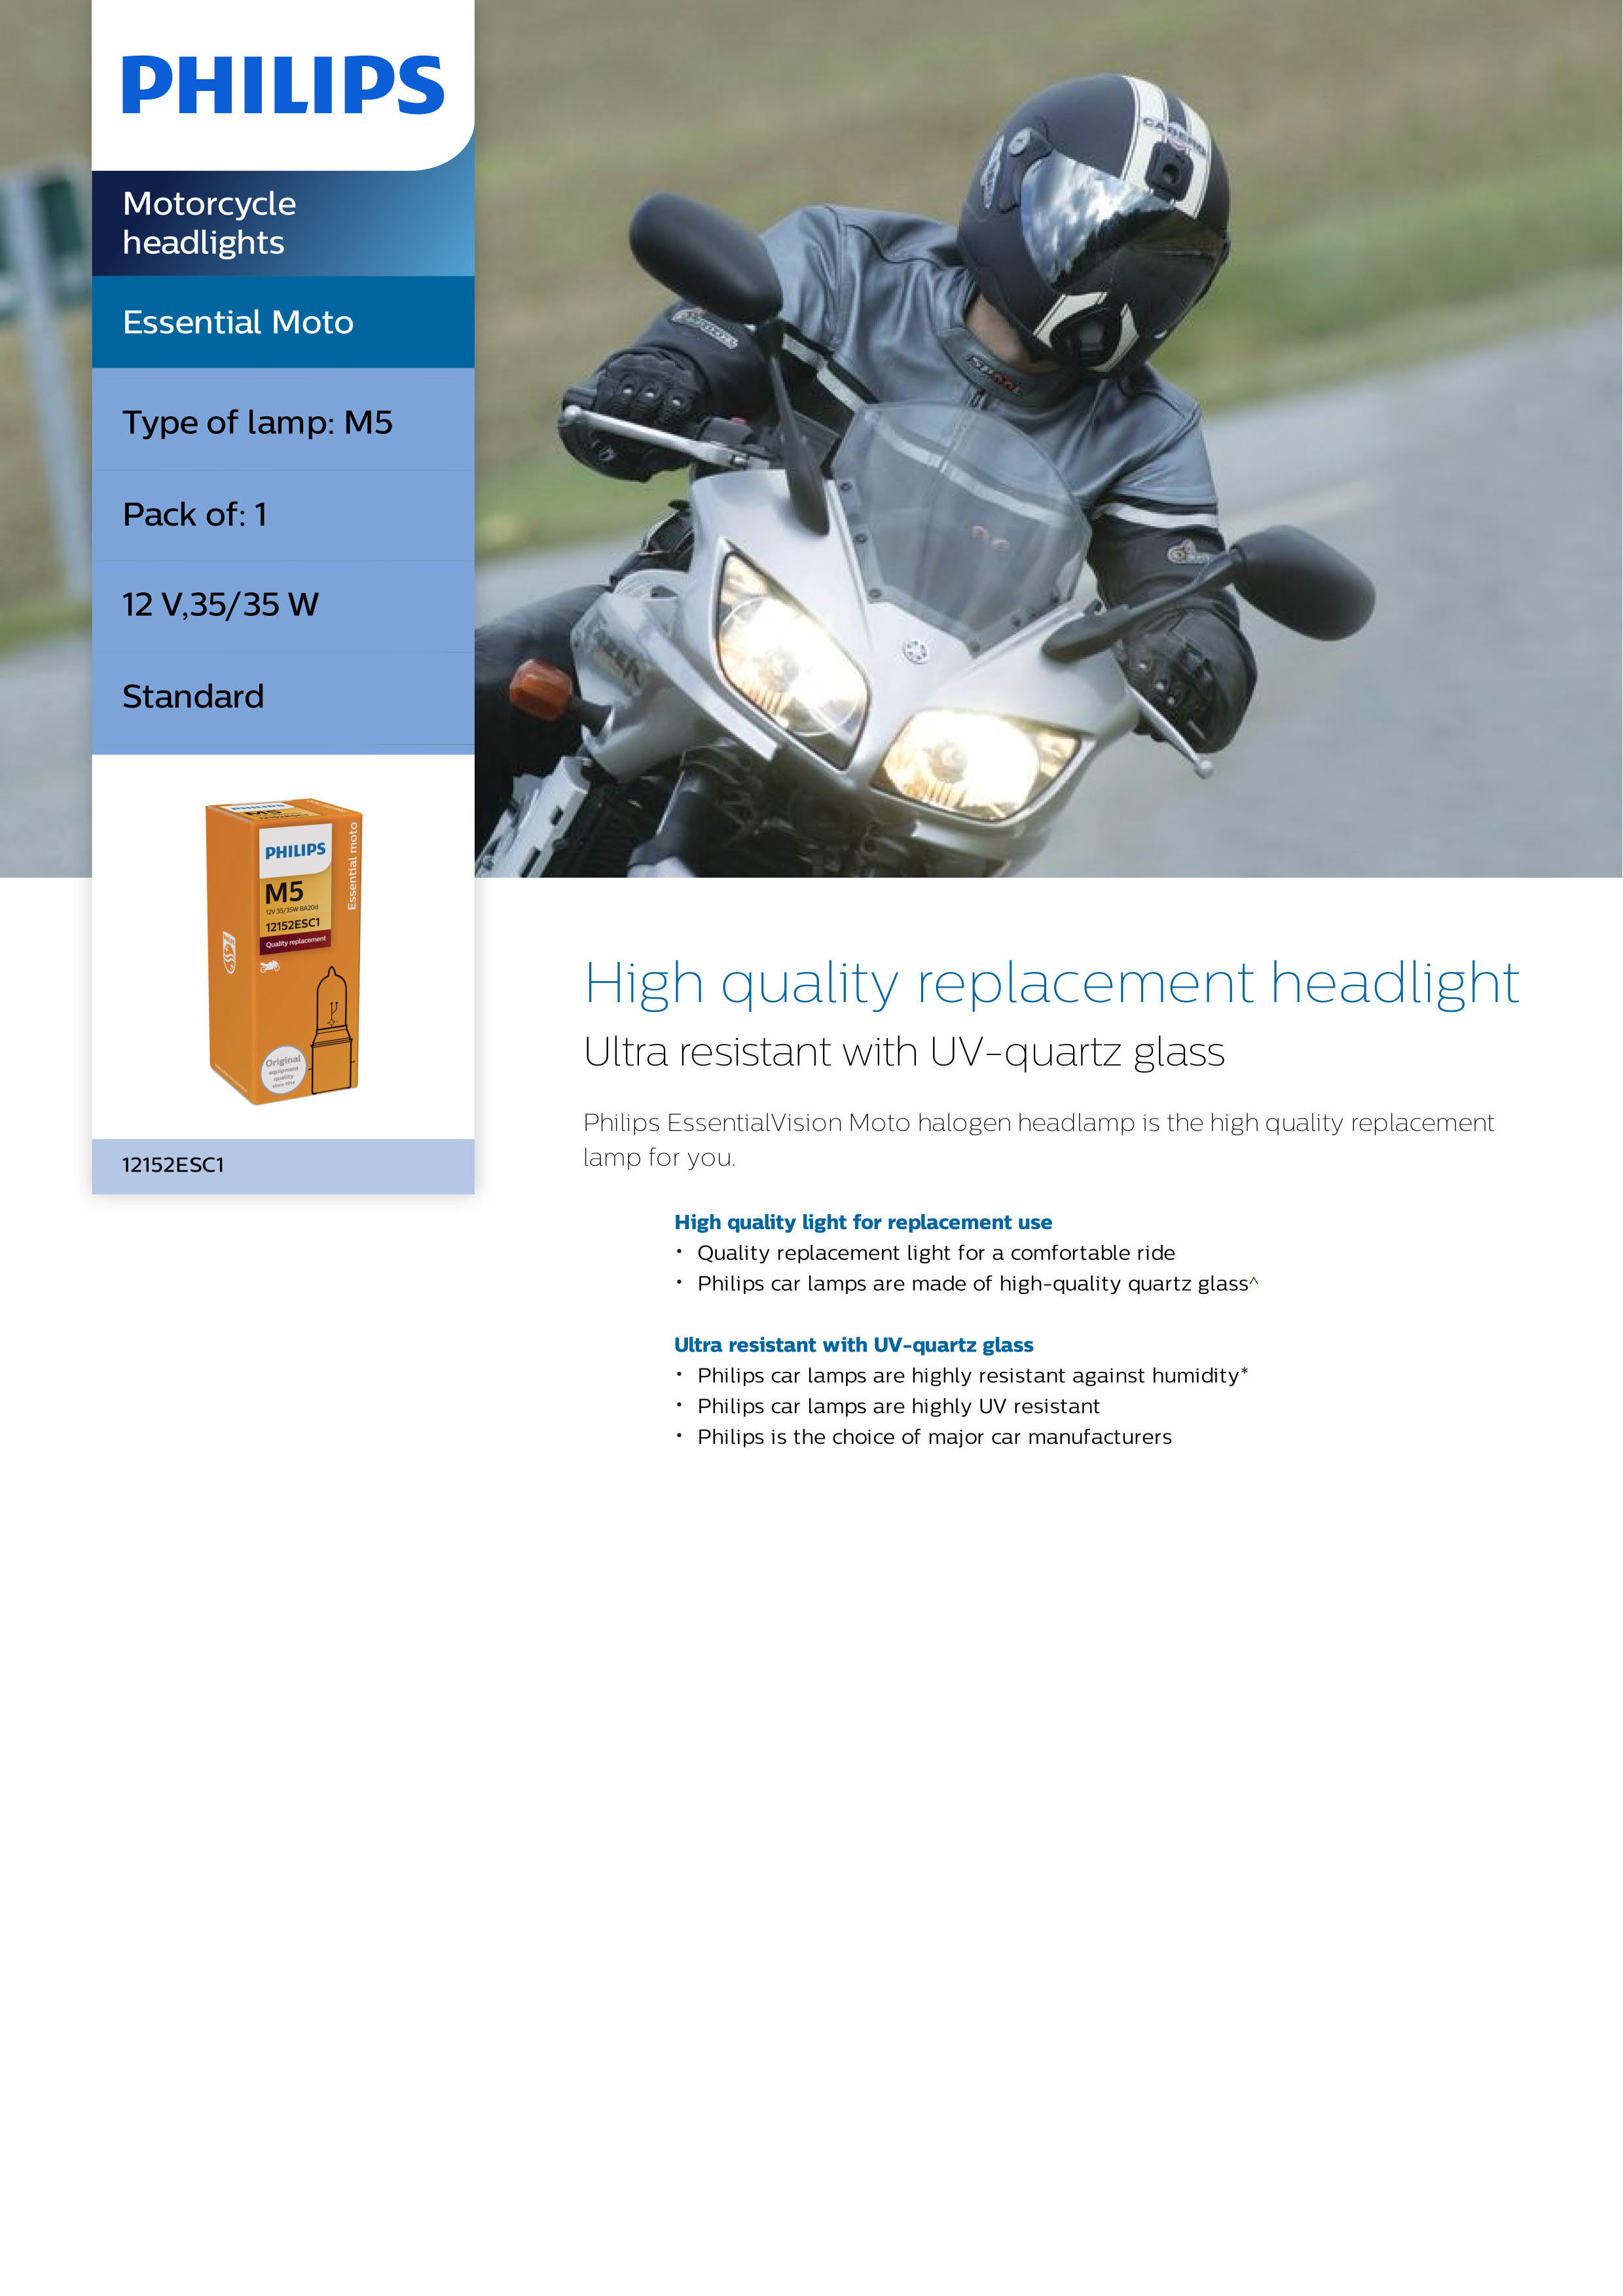 PHILIPS Essential Vision Moto headlight M5 12V 35/35W BA30d 12152ESC1 867000124553